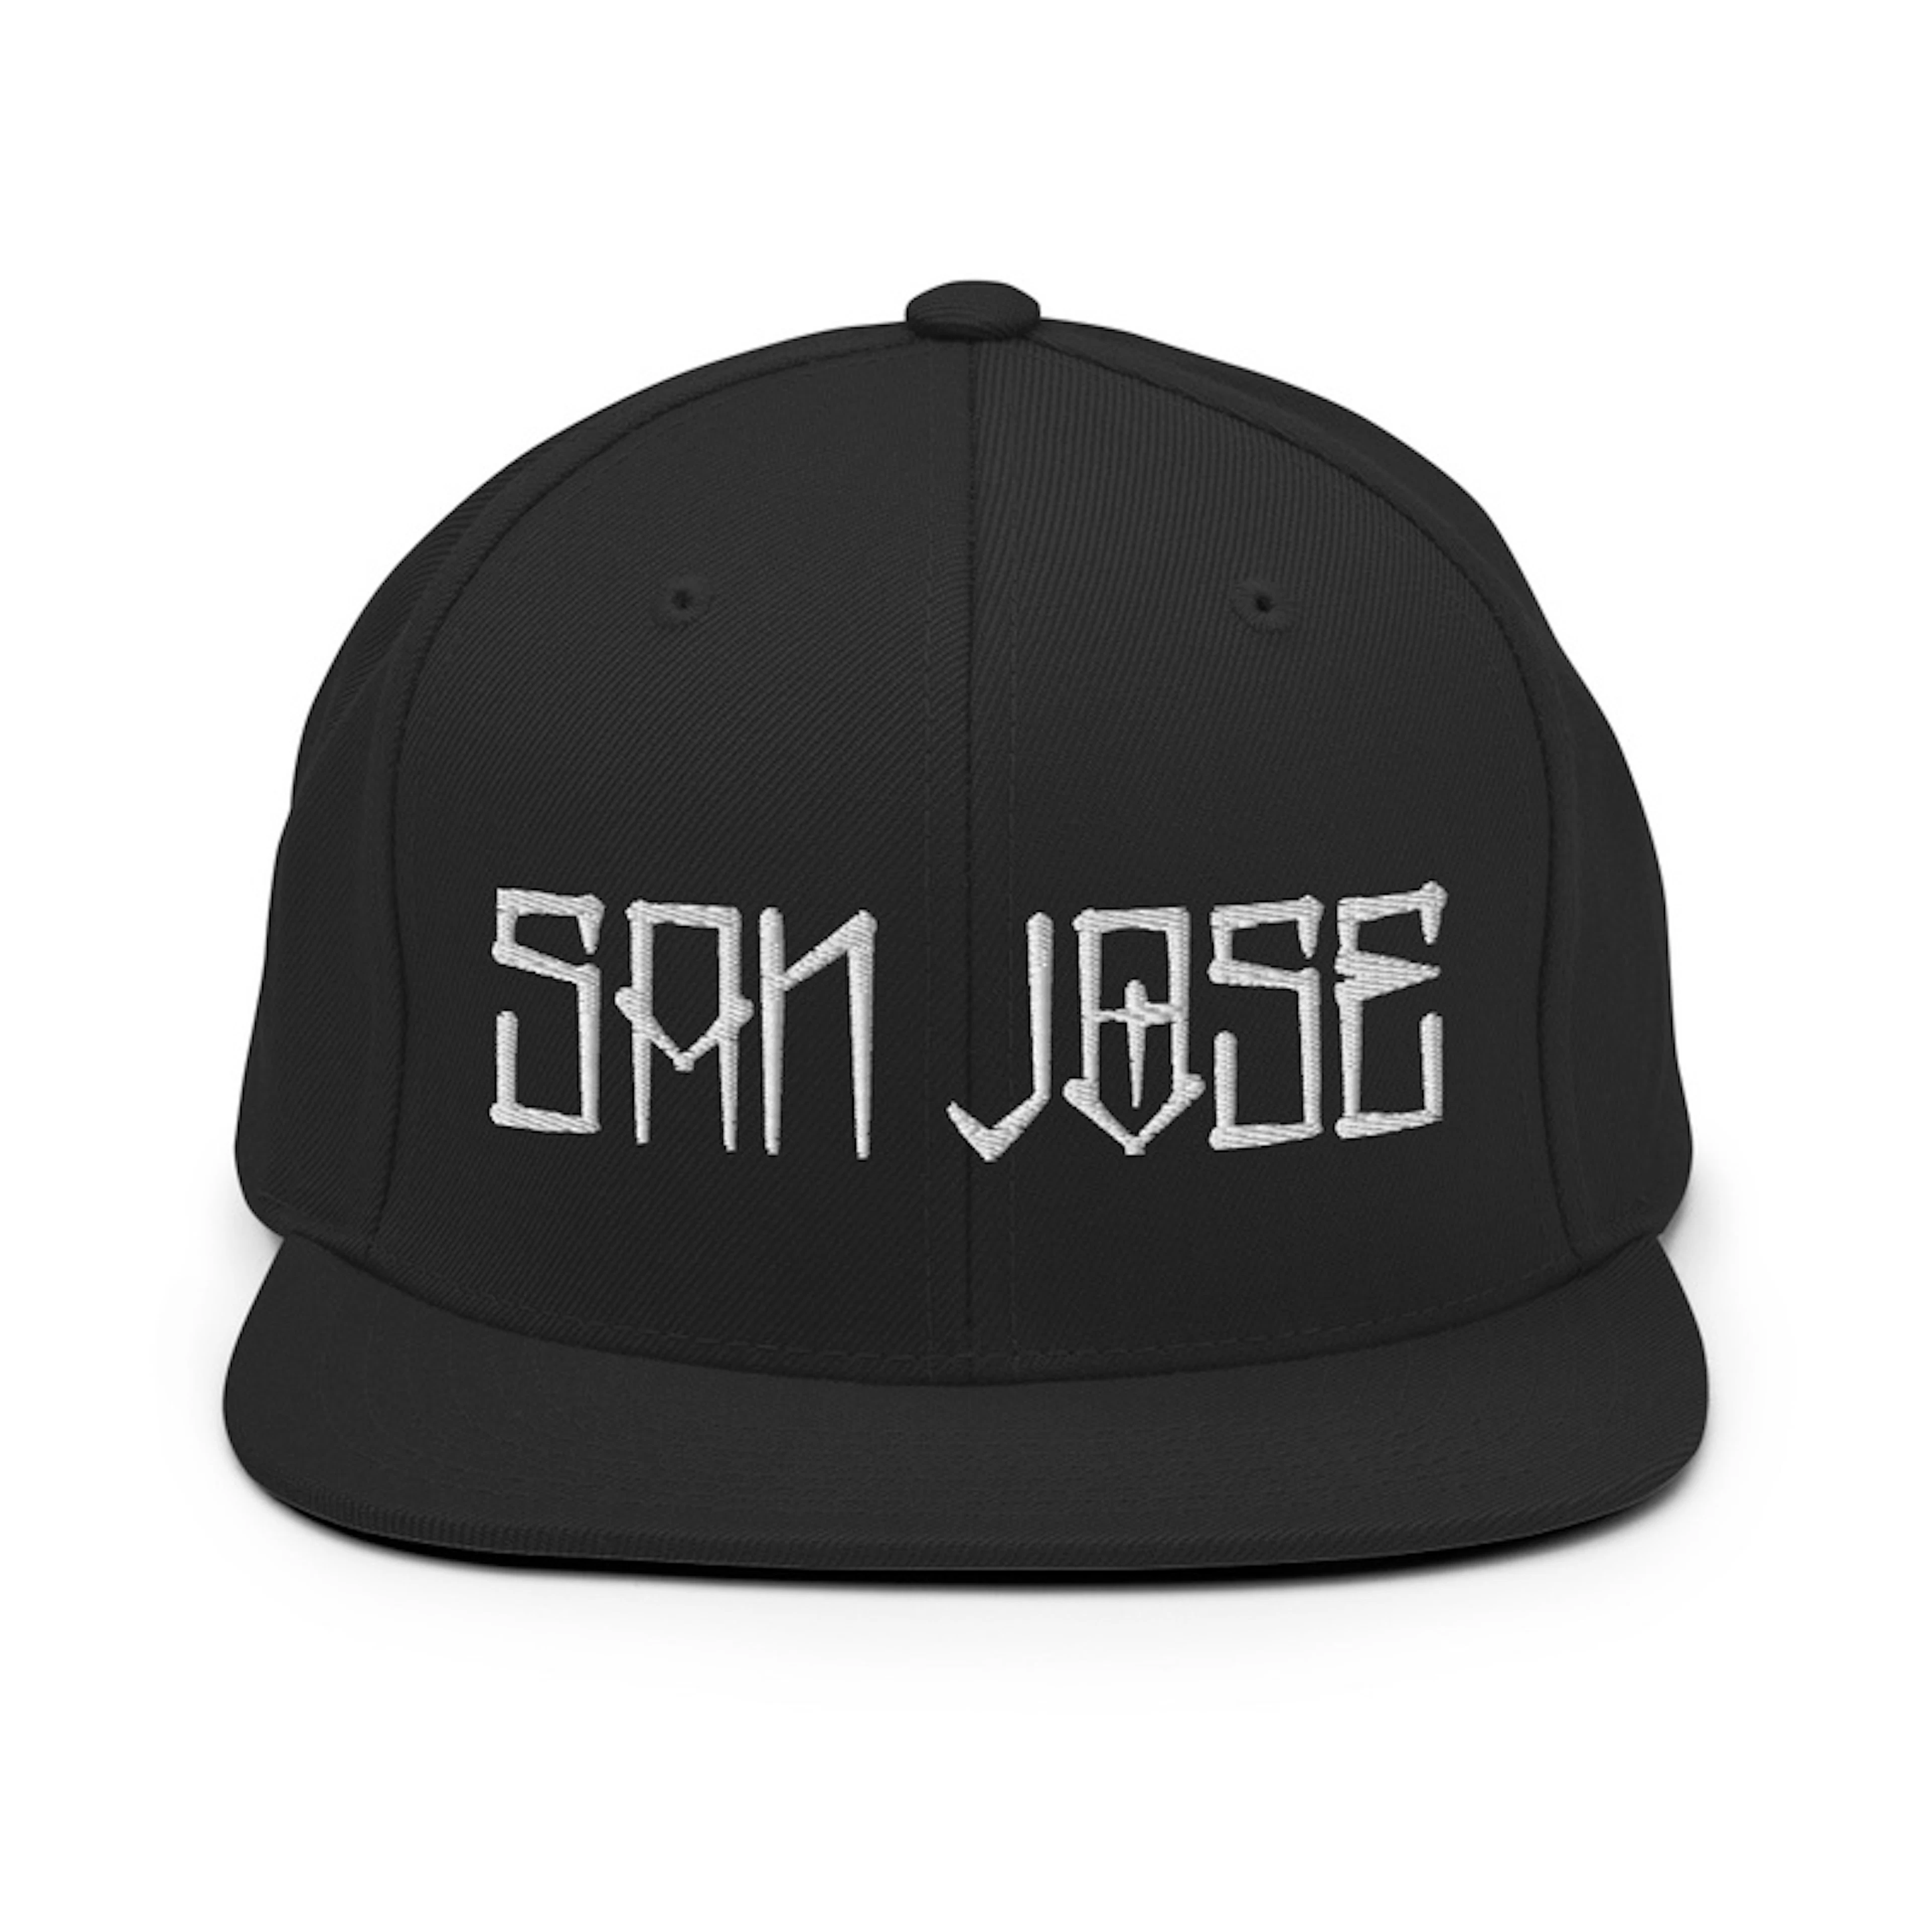 San Jose Hat